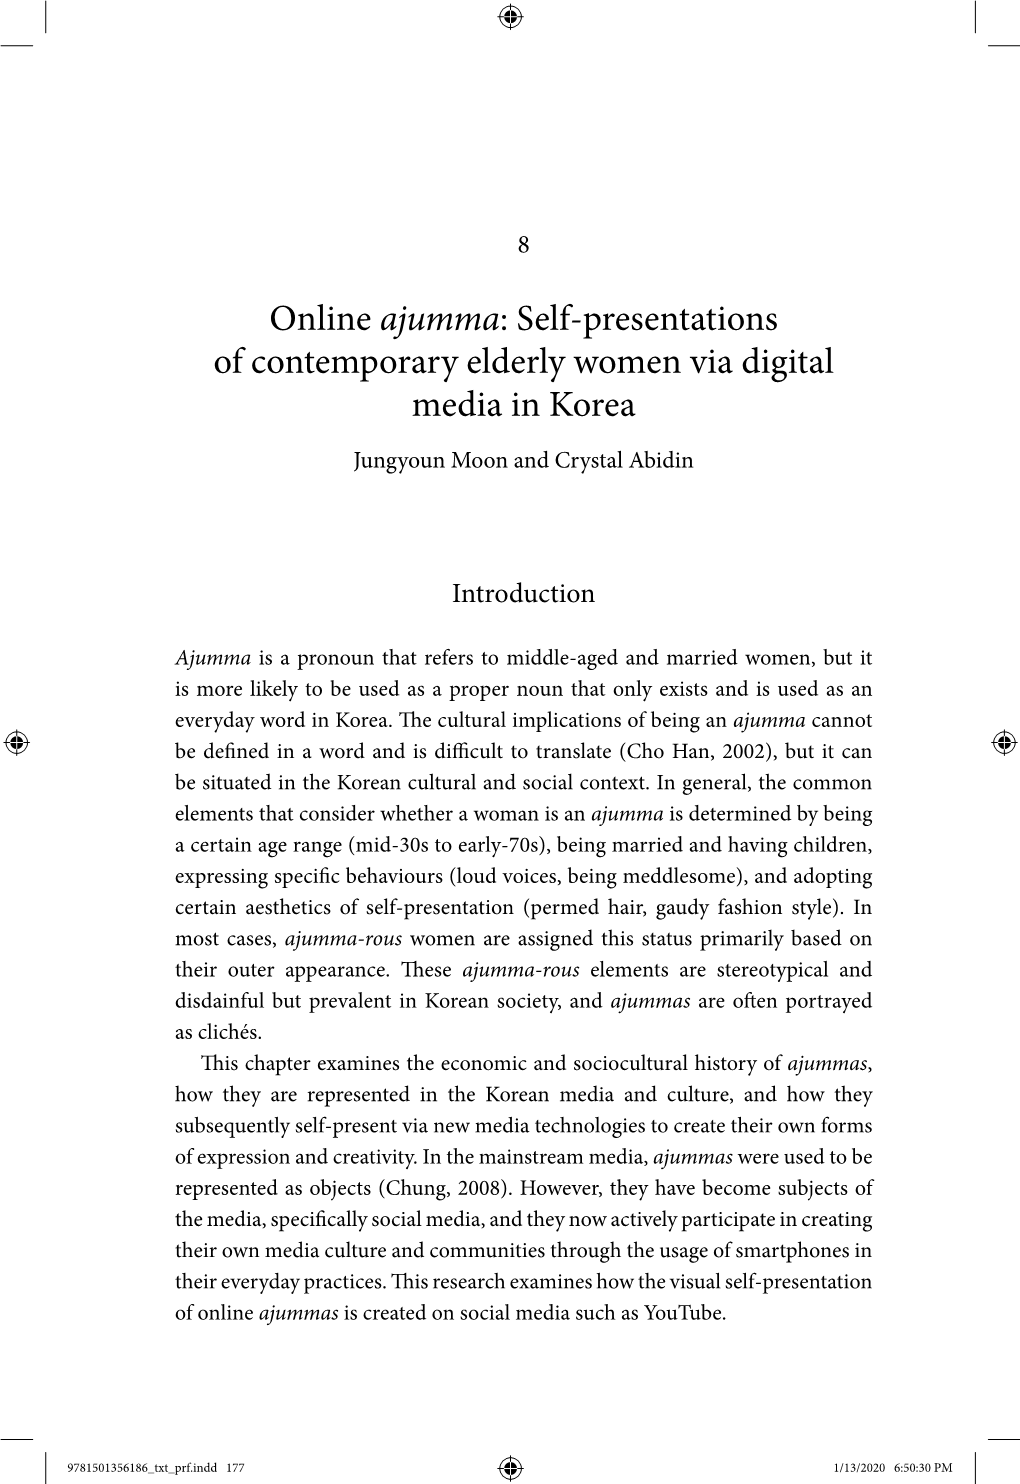 Online Ajumma: Self-Presentations of Contemporary Elderly Women Via Digital Media in Korea Jungyoun Moon and Crystal Abidin